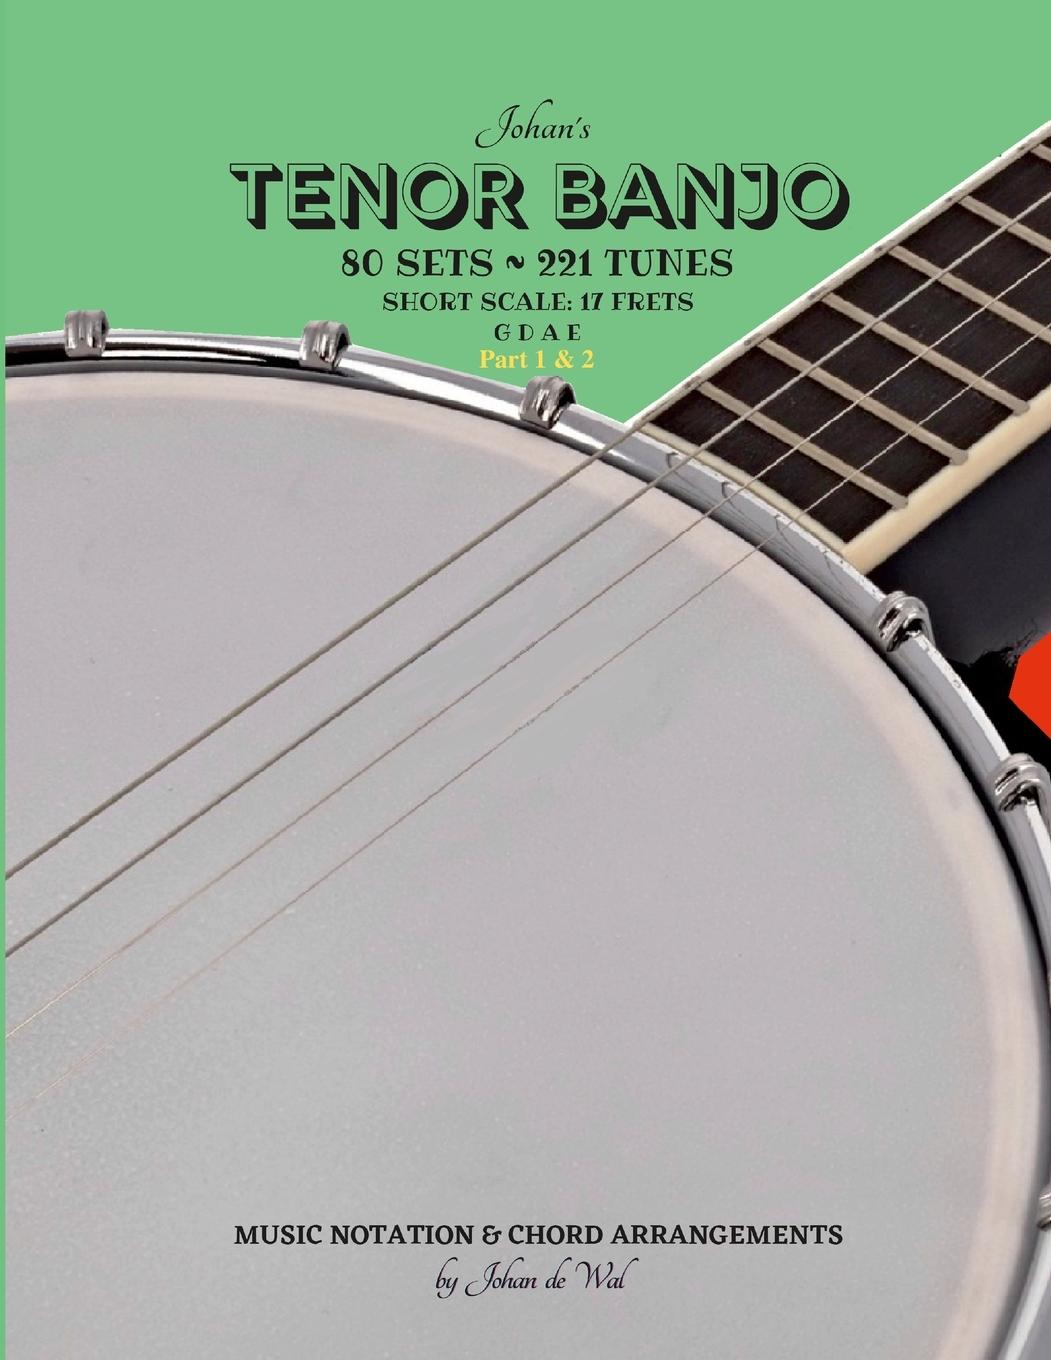 Carte Johan's TENOR BANJO Sets & Tunes (Part 1 & 2) 